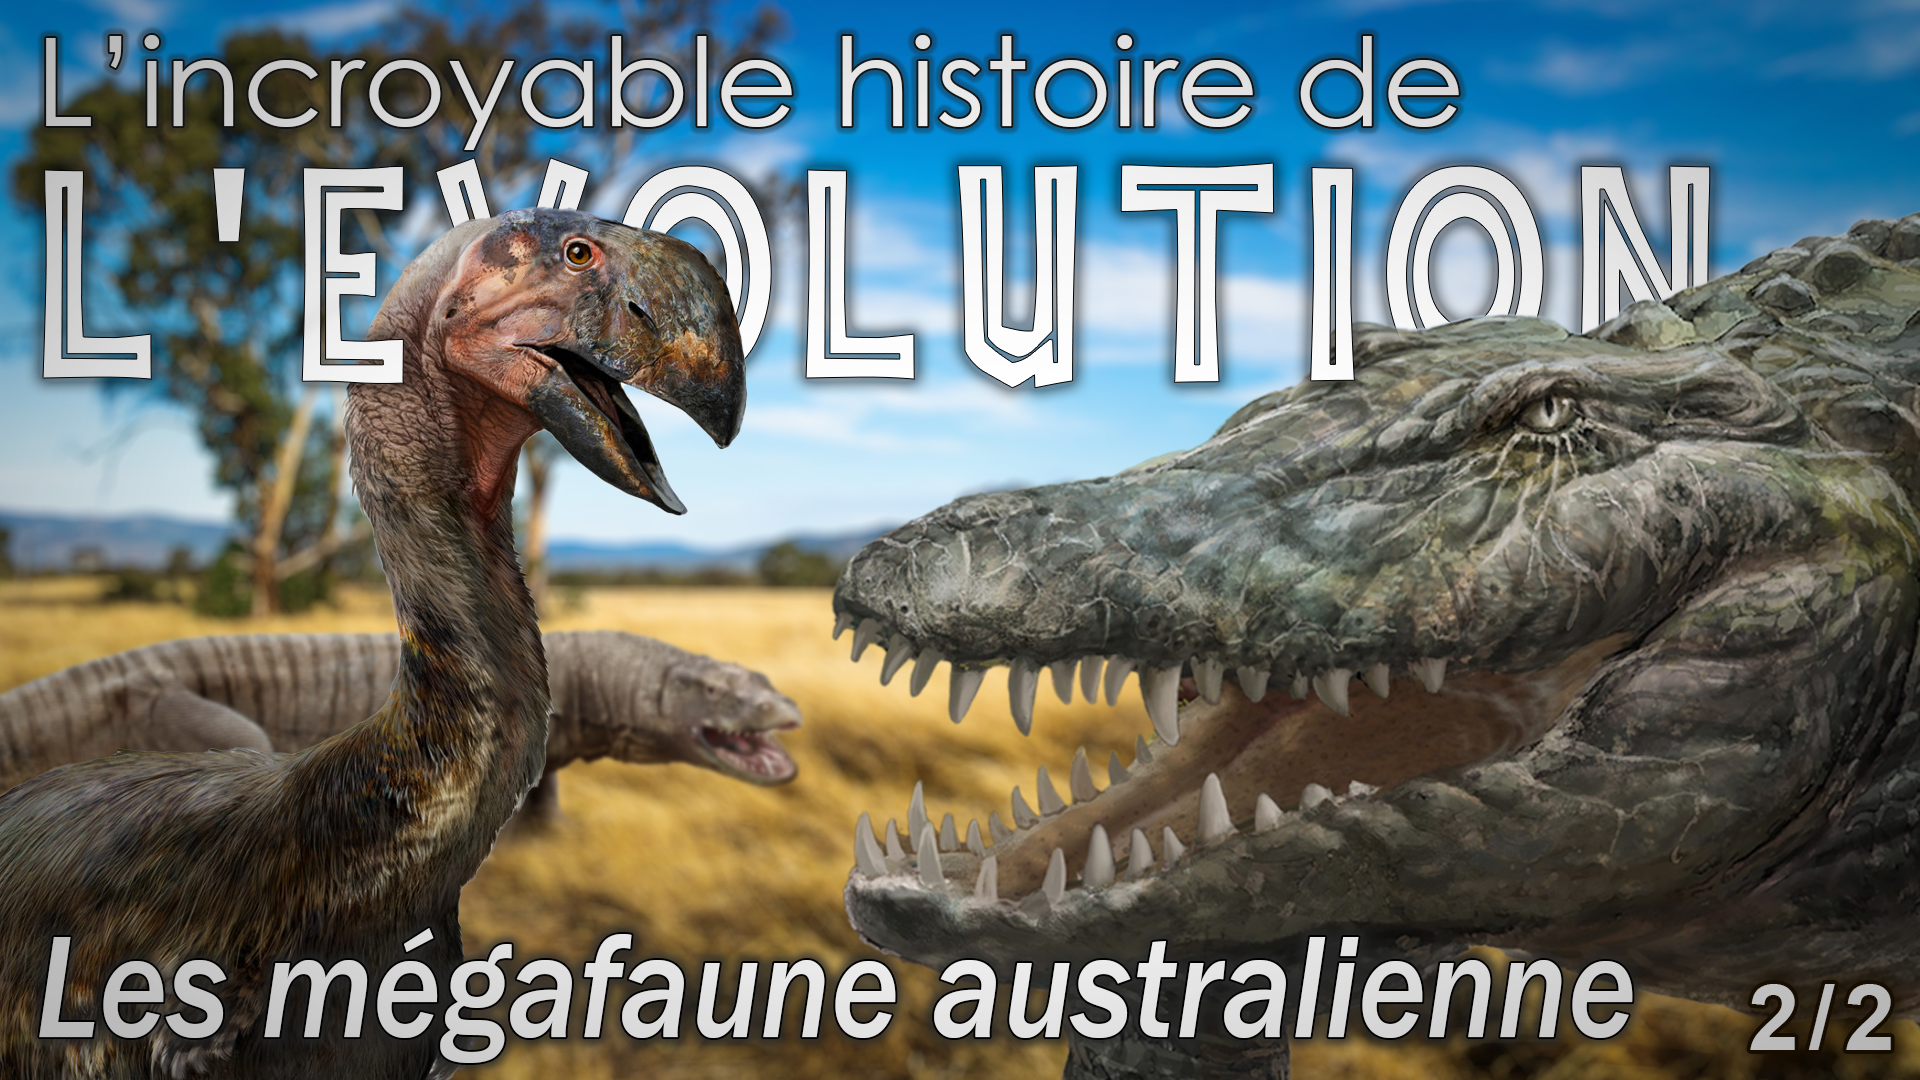 La mégafaune australienne